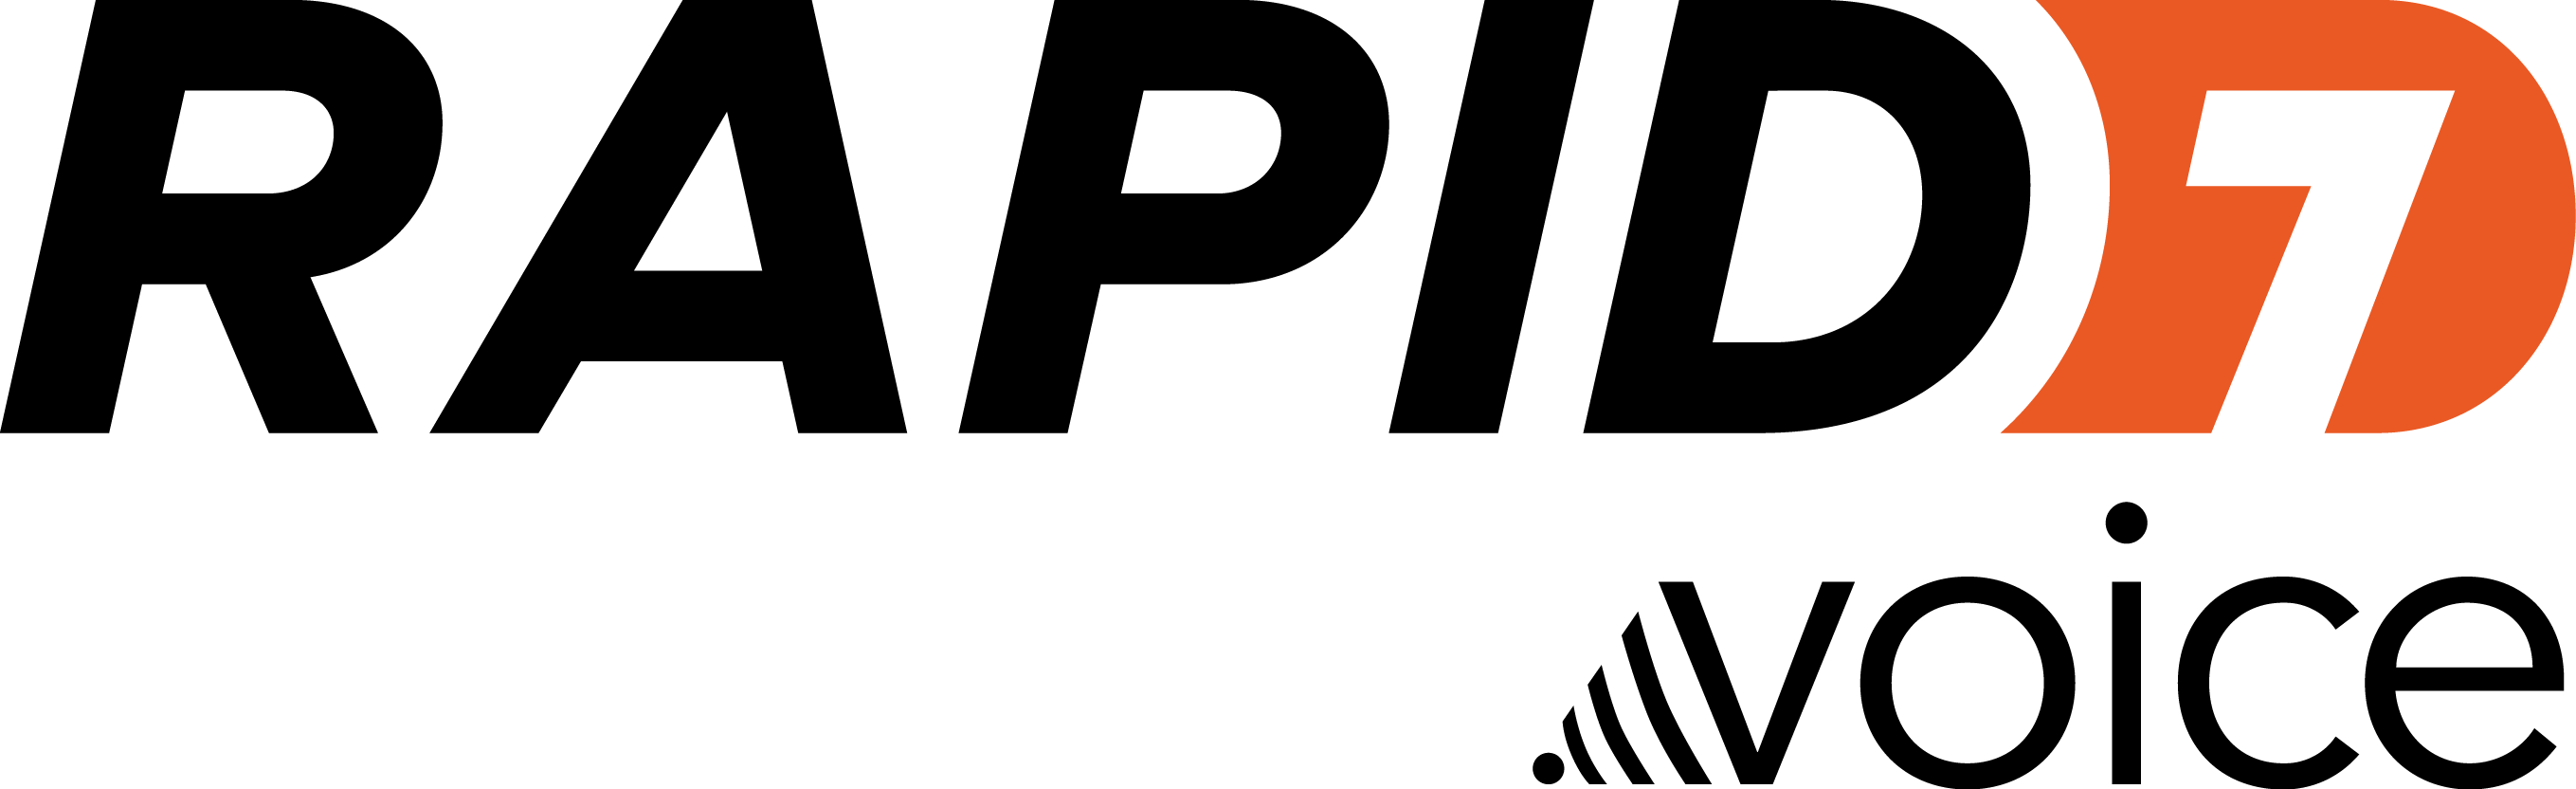 Rapid7 Logo - Rapid7 Voice